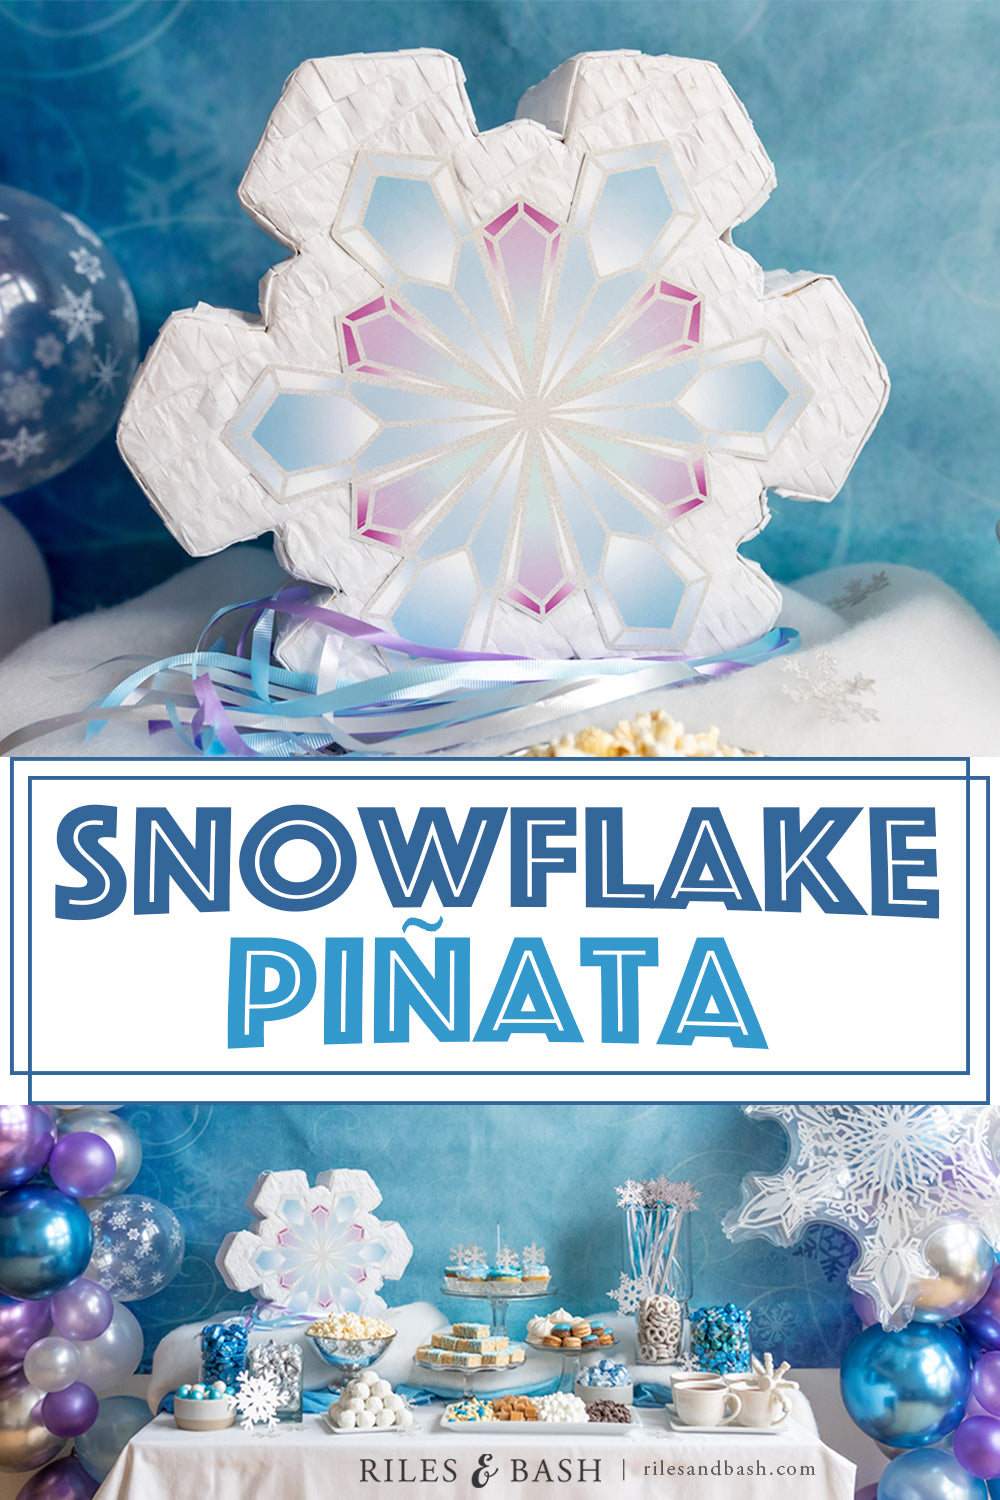 Winter Wonderland Snowflake Princess Party Birthday Party Ideas